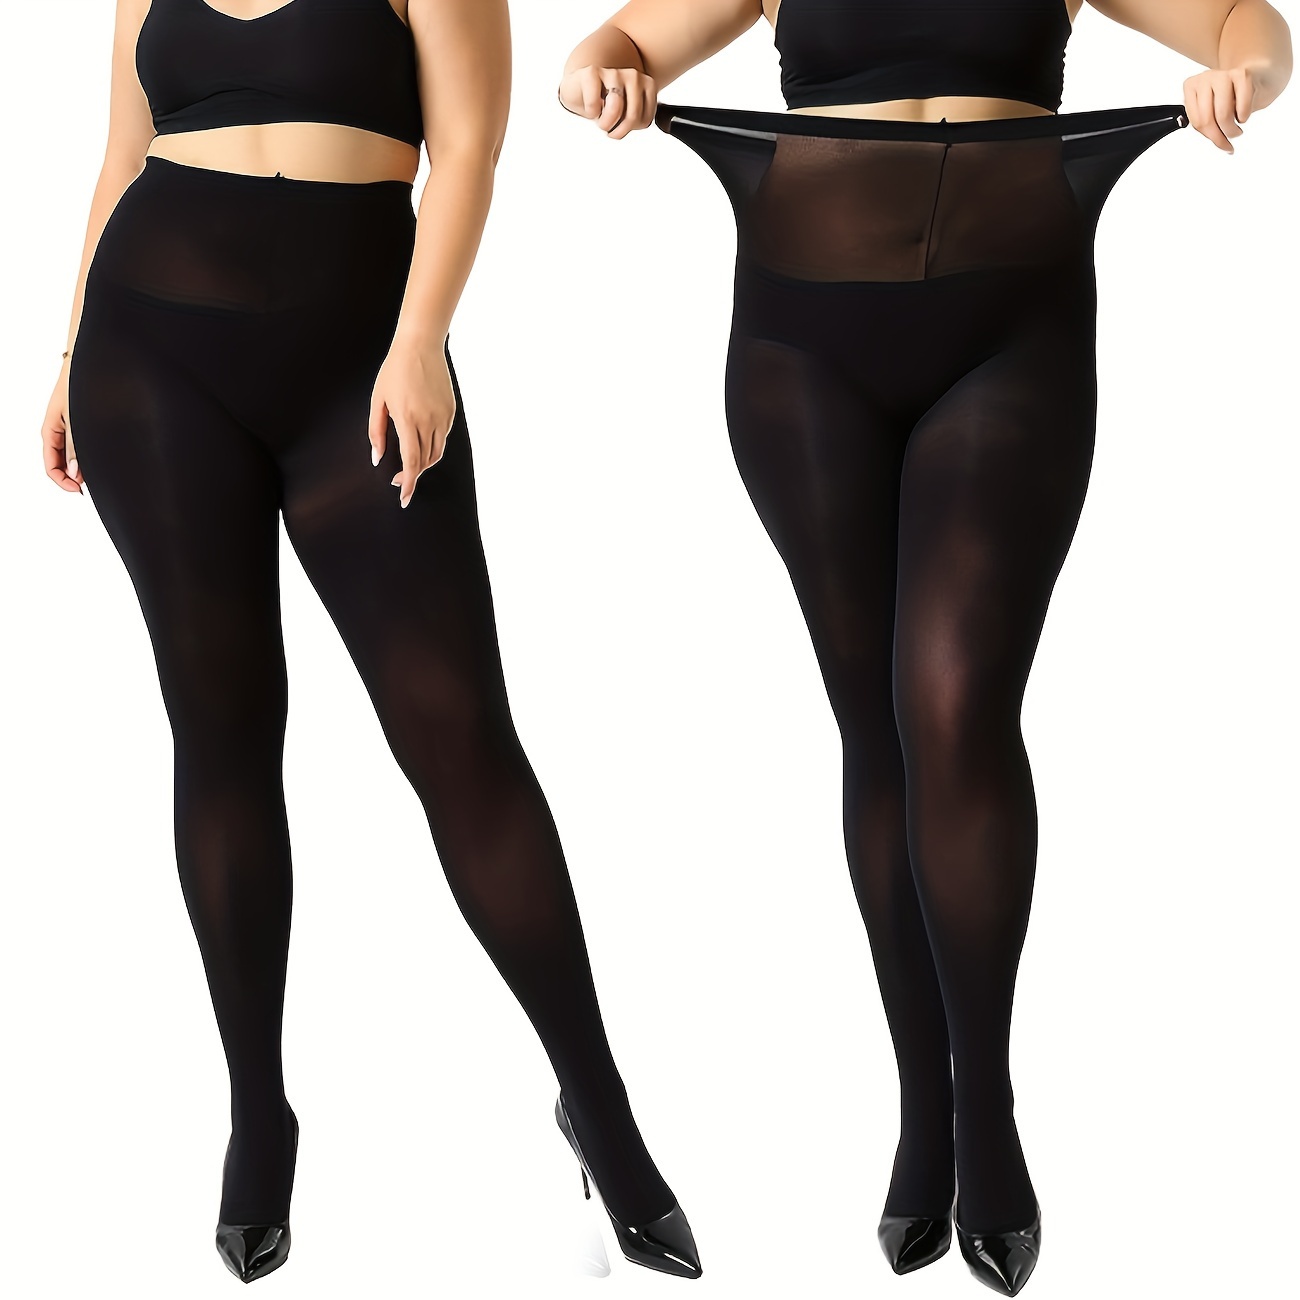 MANZI Women's 2 Pairs Plus Size Control Top Ultra-Soft Pantyhose